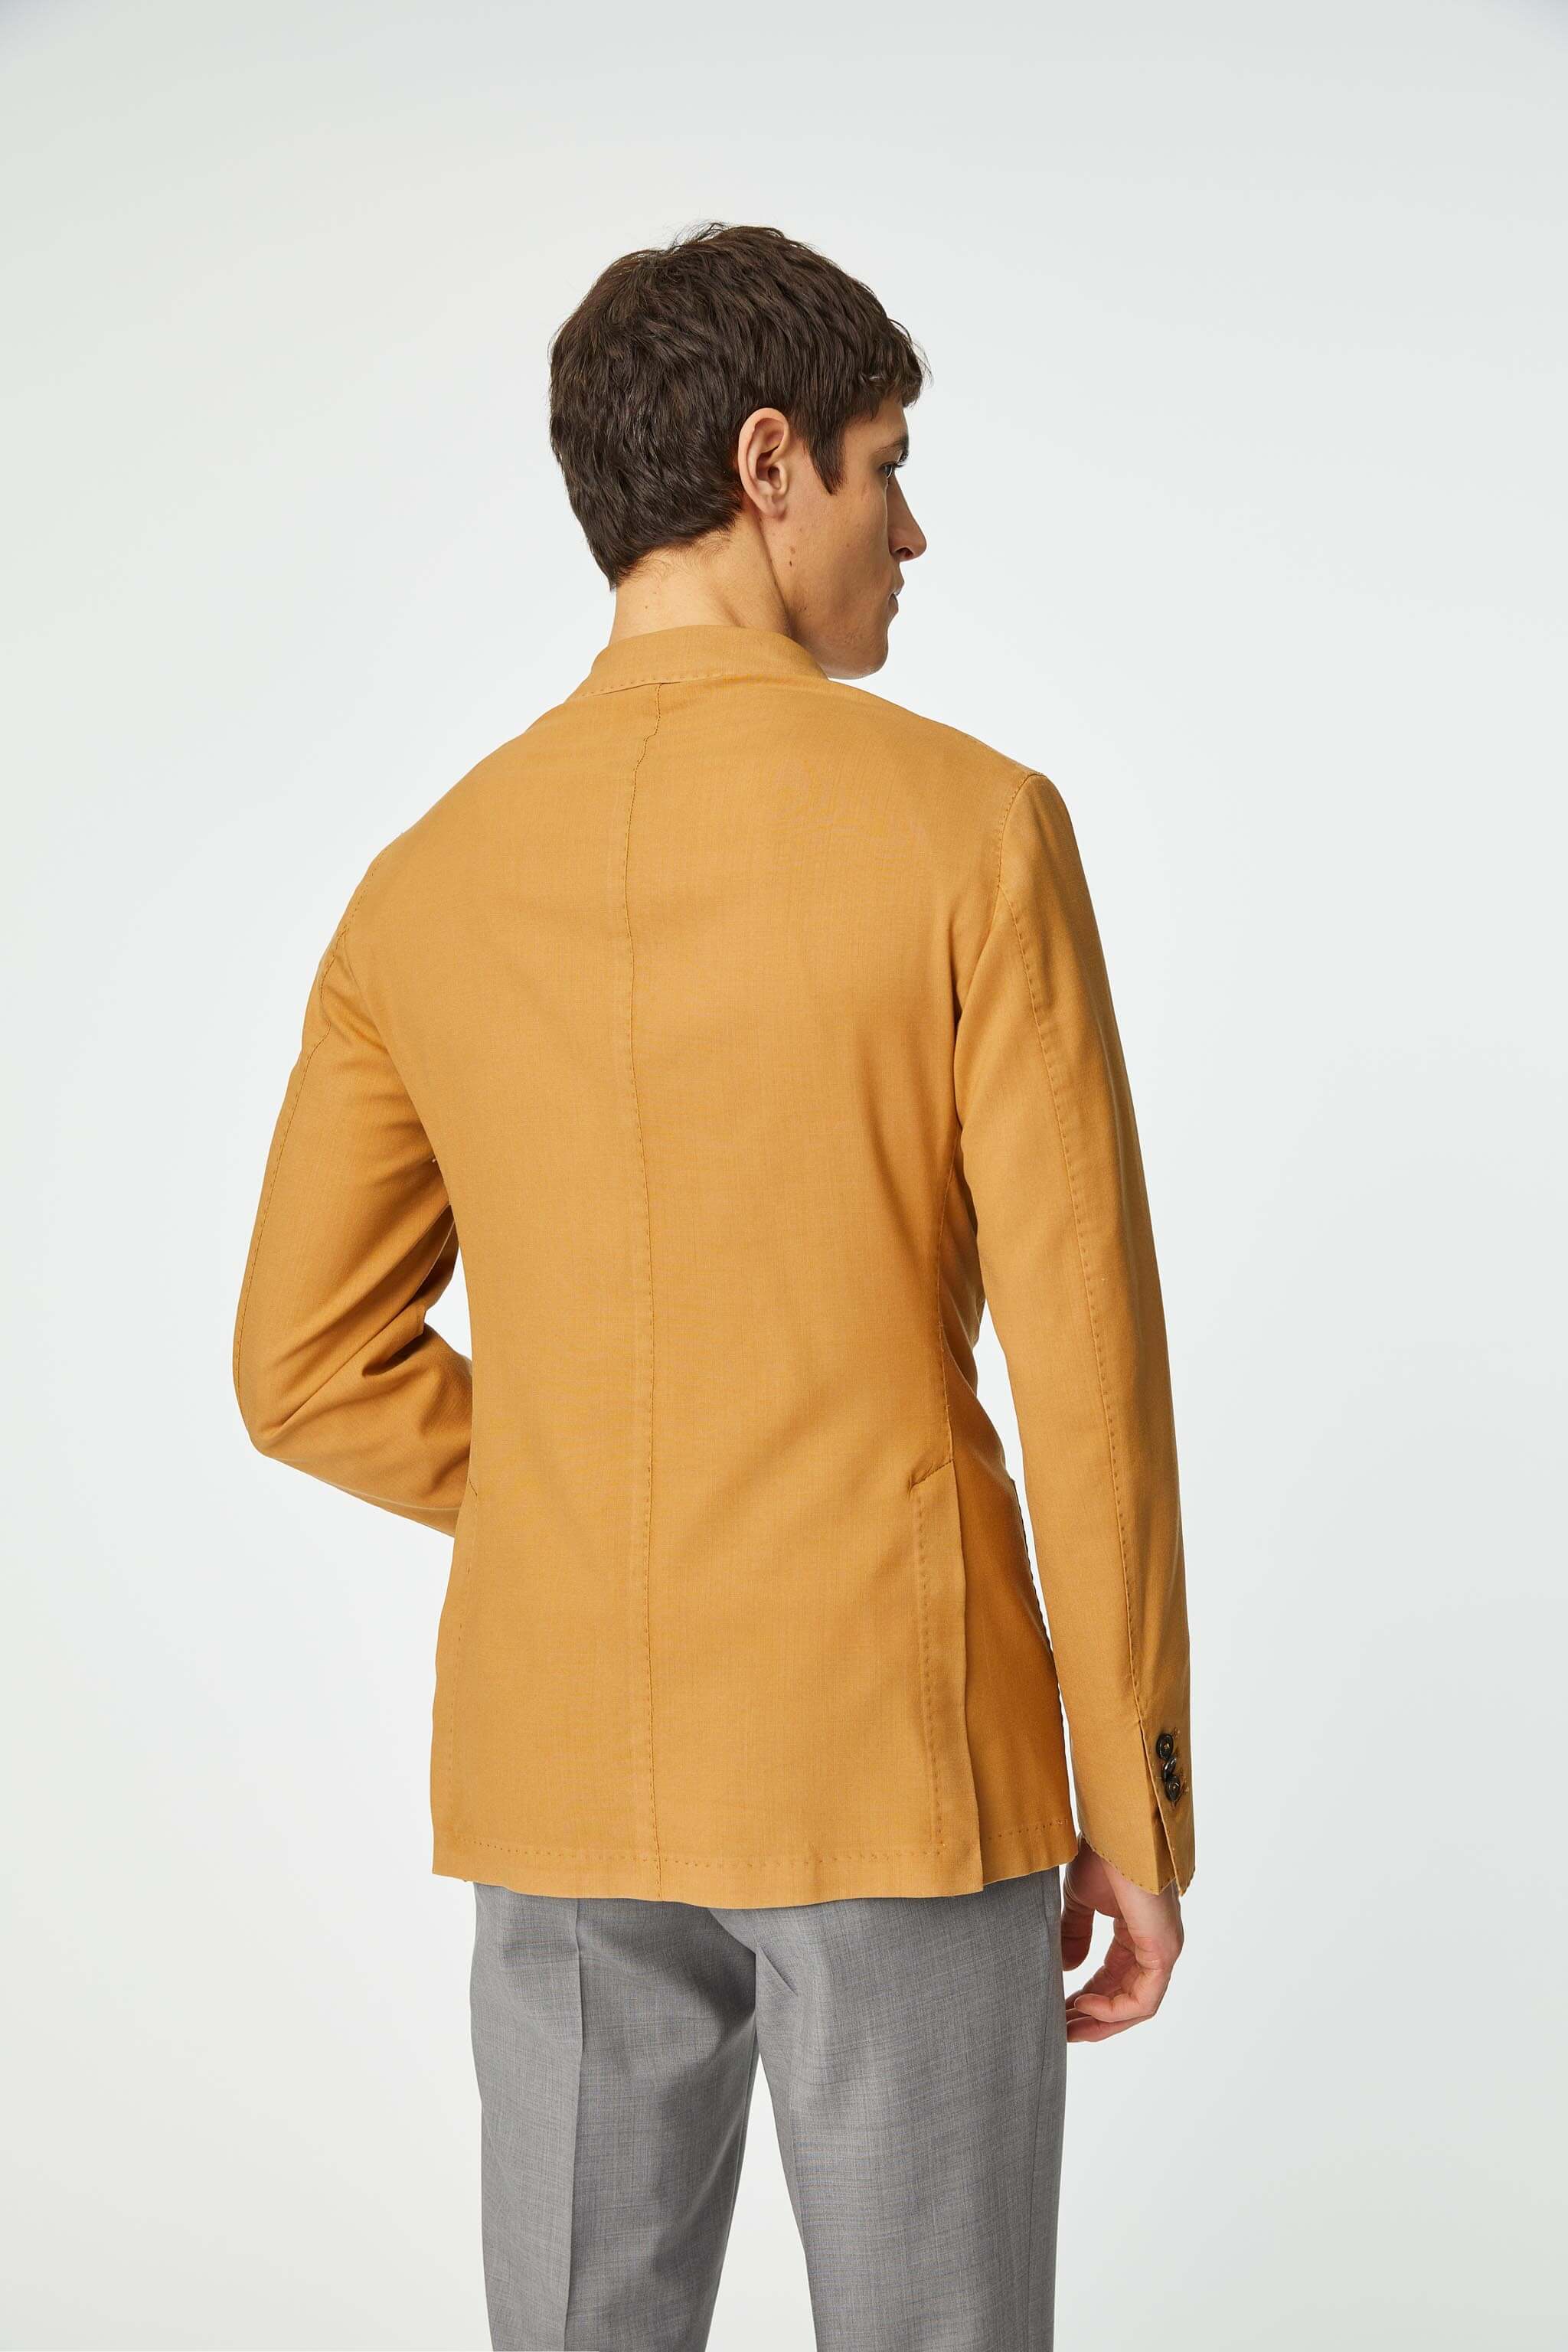 Garment-dyed TOM jacket in camel